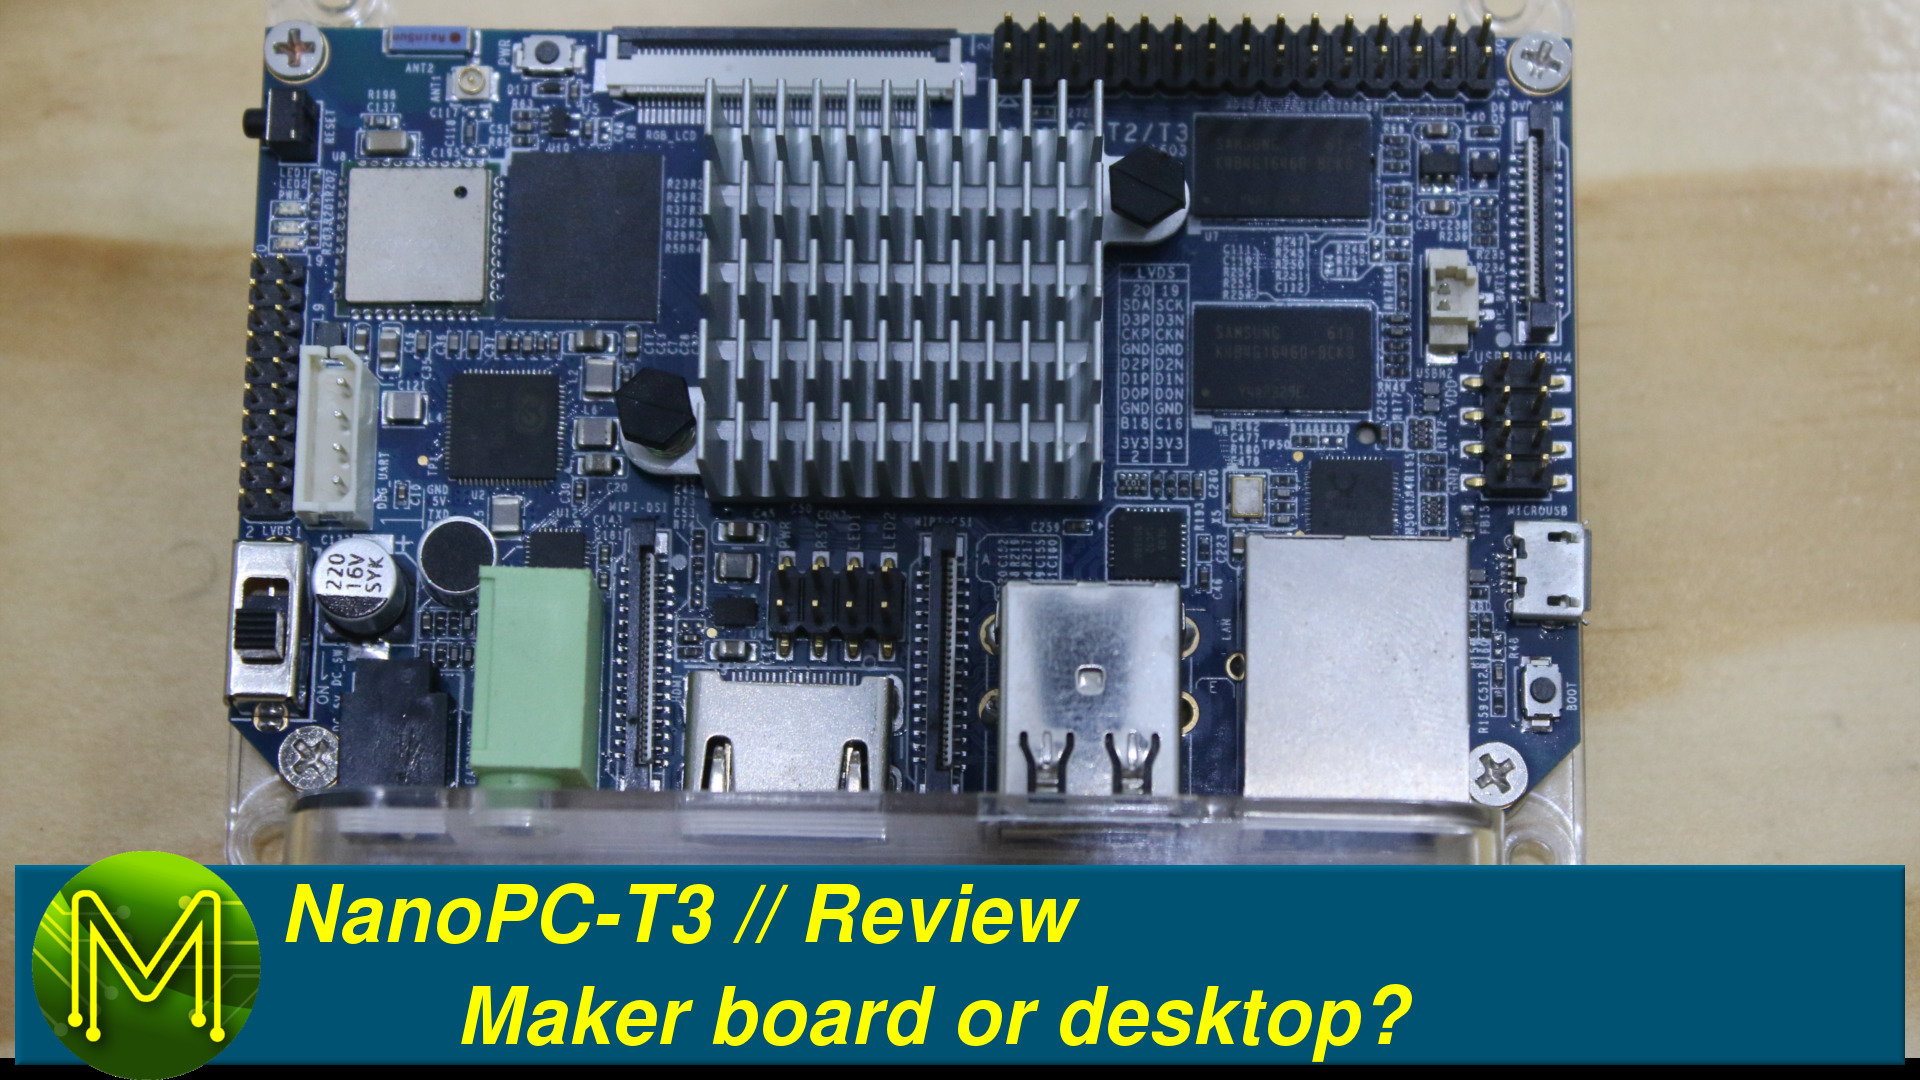 NanoPC-T3: Maker board or desktop? // Review